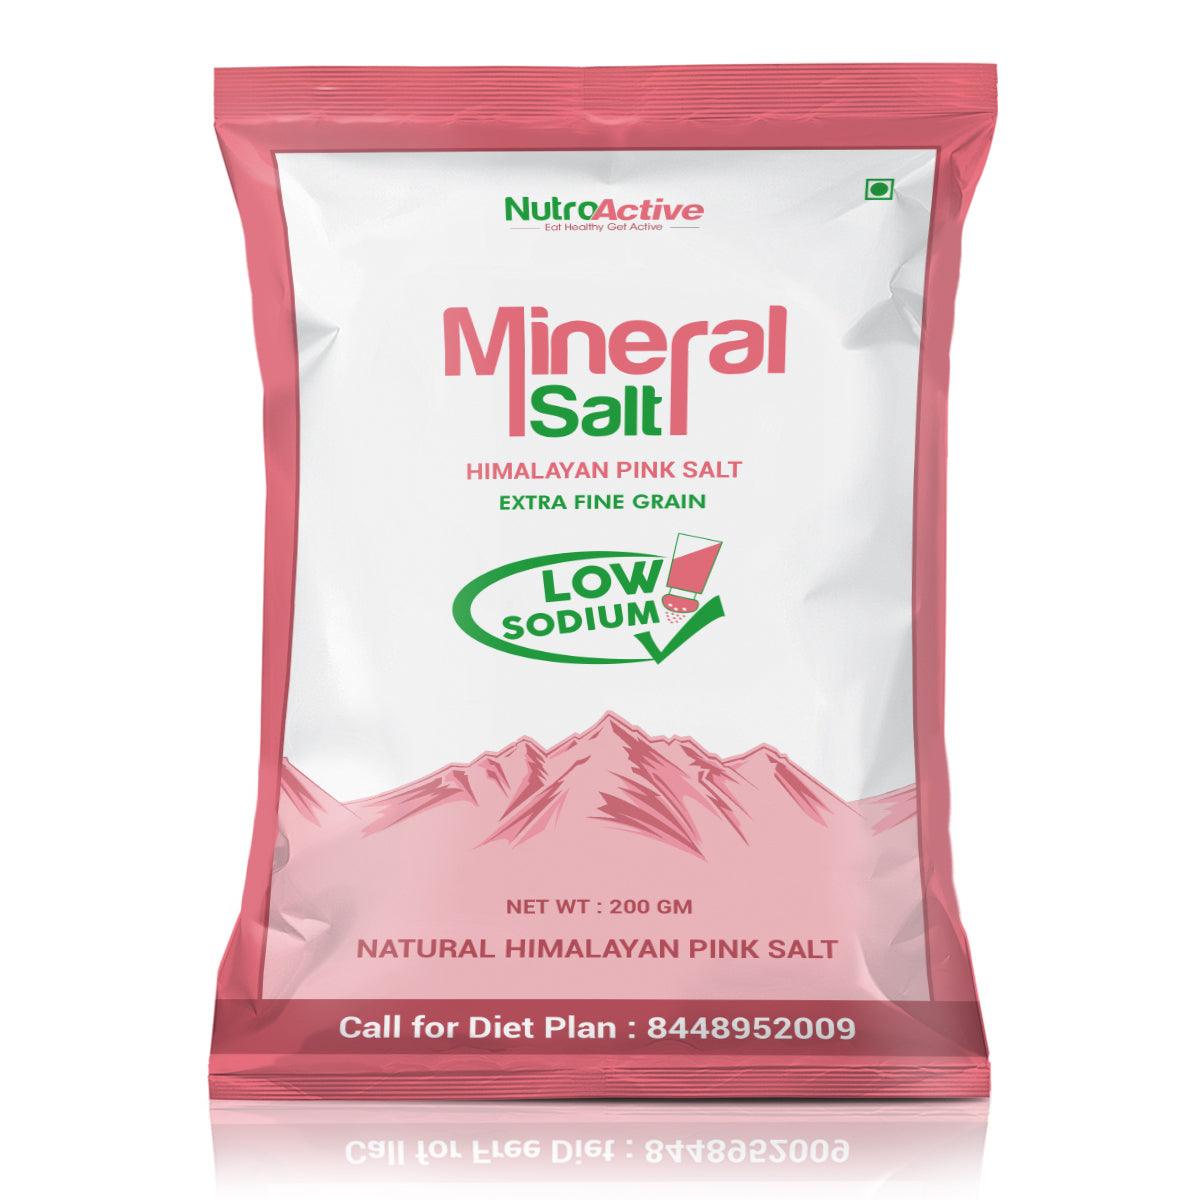 NutroActive MineralSalt Low Sodium Himalayan Rock Pink Salt Extra Fine Grain 200g - Diabexy